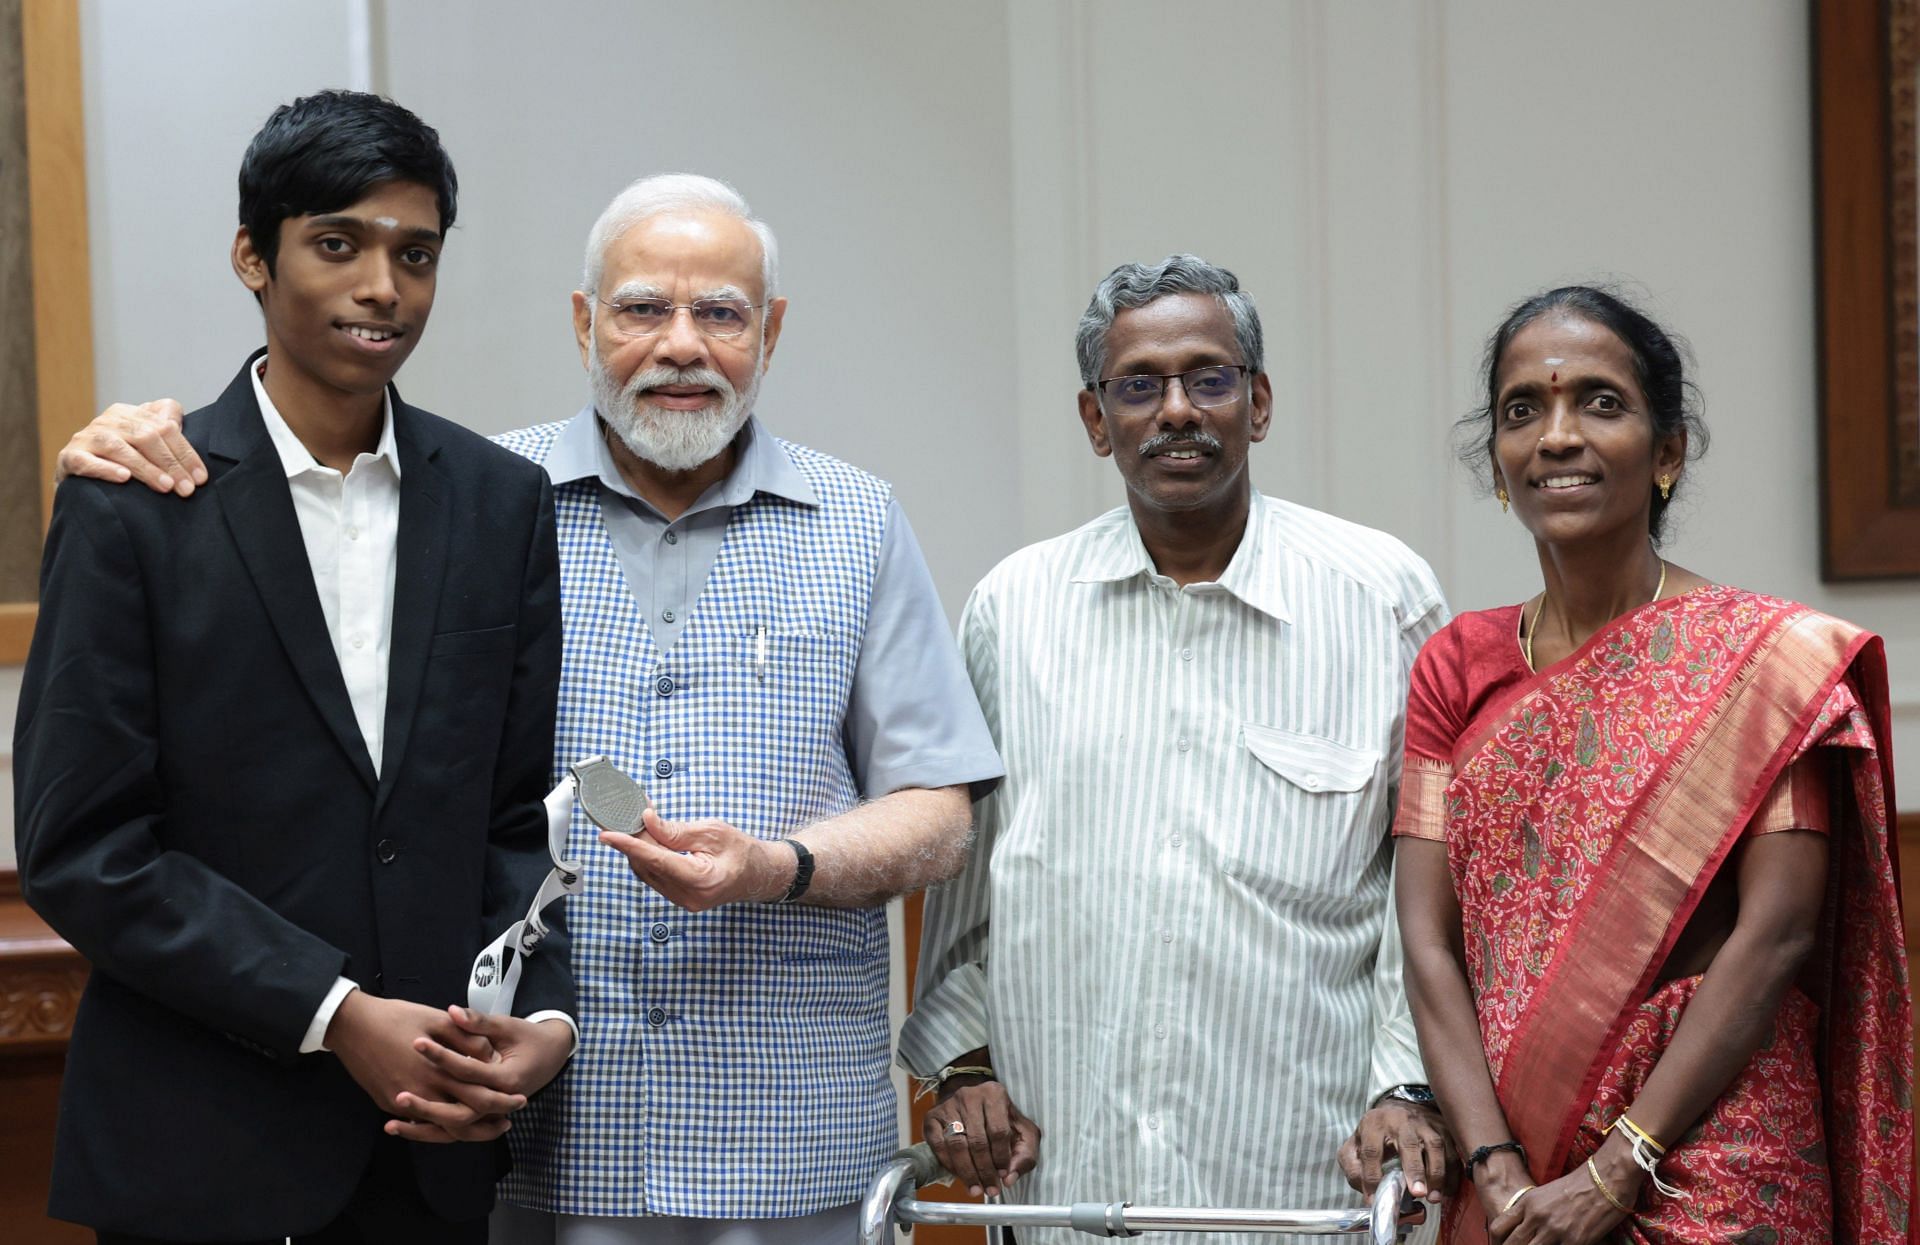 Praggnanandhaa of India with PM Narendra Modi. Courtesy: Praggnanandhaa